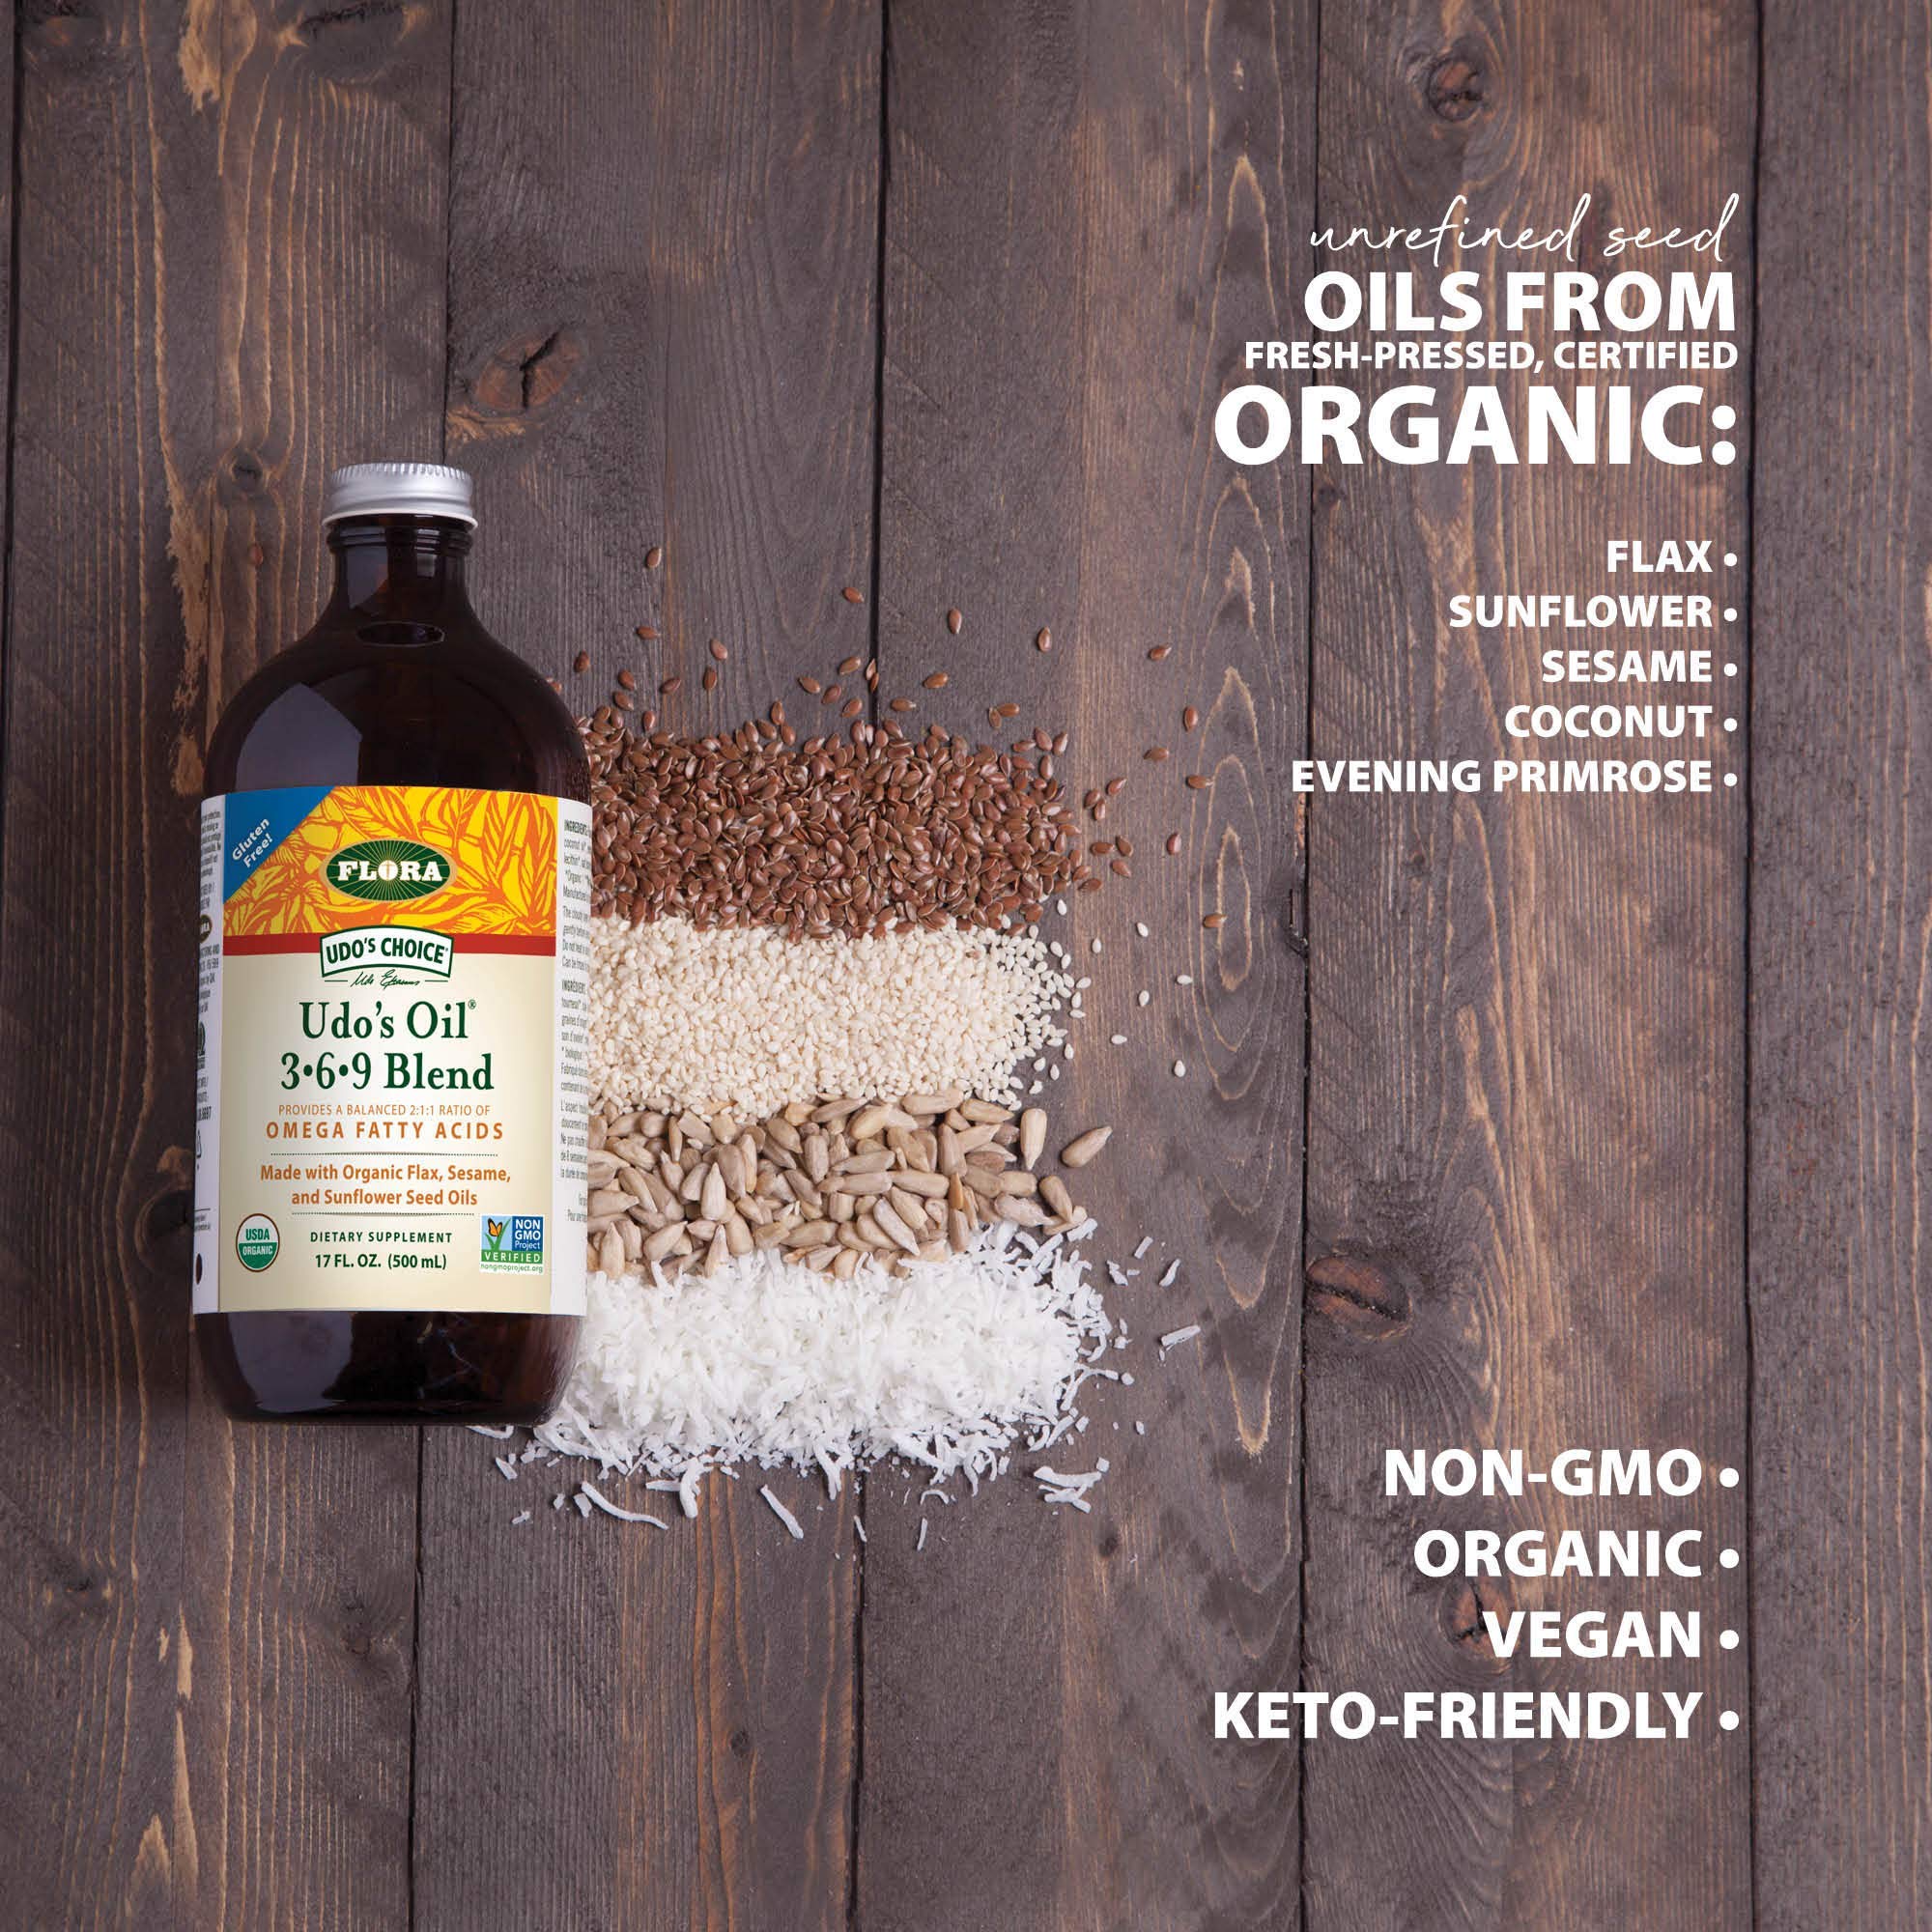 Flora - Udo's Choice Omega 369 Oil Blend, Made with Organic Flax, Sesame & Sunflower Seed Oils, Plant-Based Vegan Omega Fatty Acids, Based on Ideal 2:1:1 Ratio, 17-fl, oz. Glass Bottle